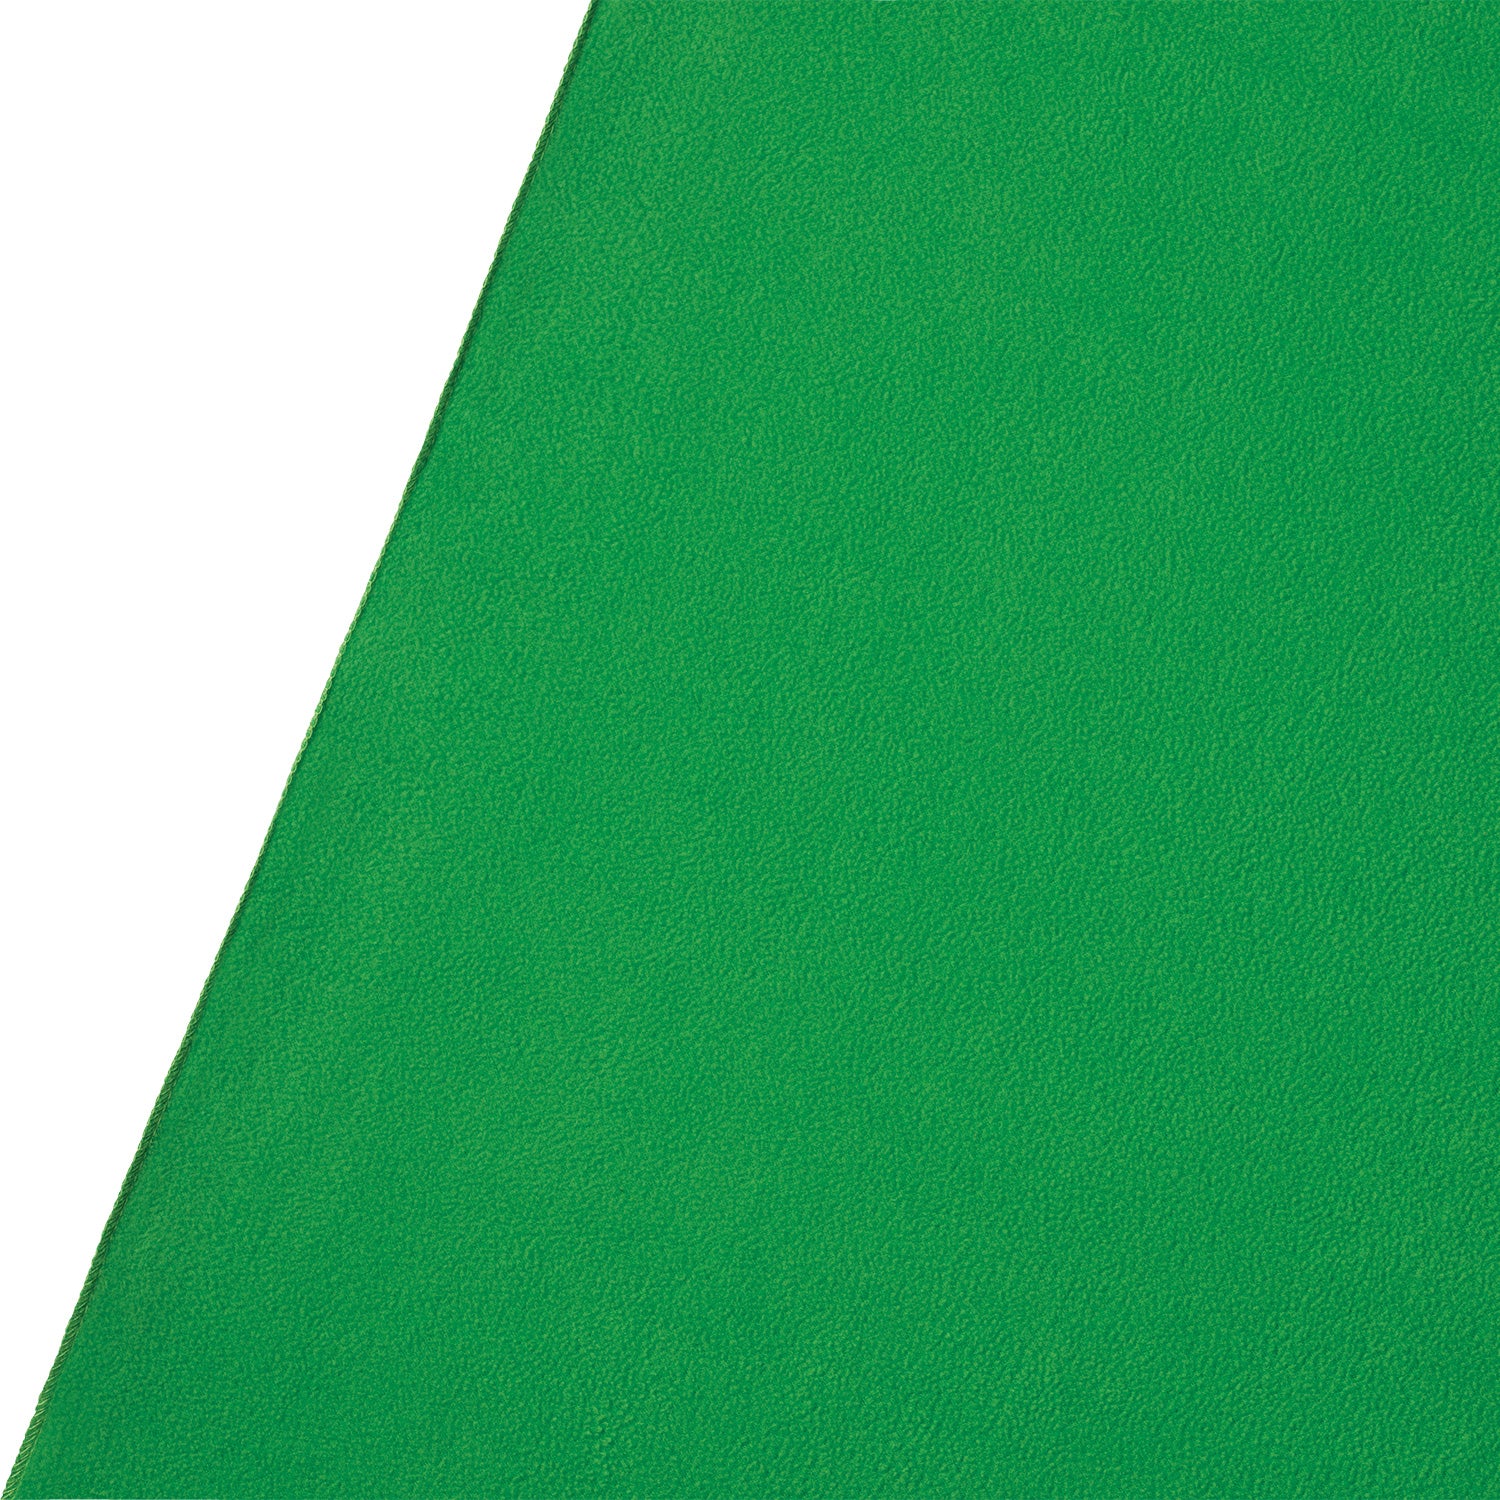 X-Drop Wrinkle-Resistant Backdrop Kit - Chroma-Key Green Screen (5' x 7')